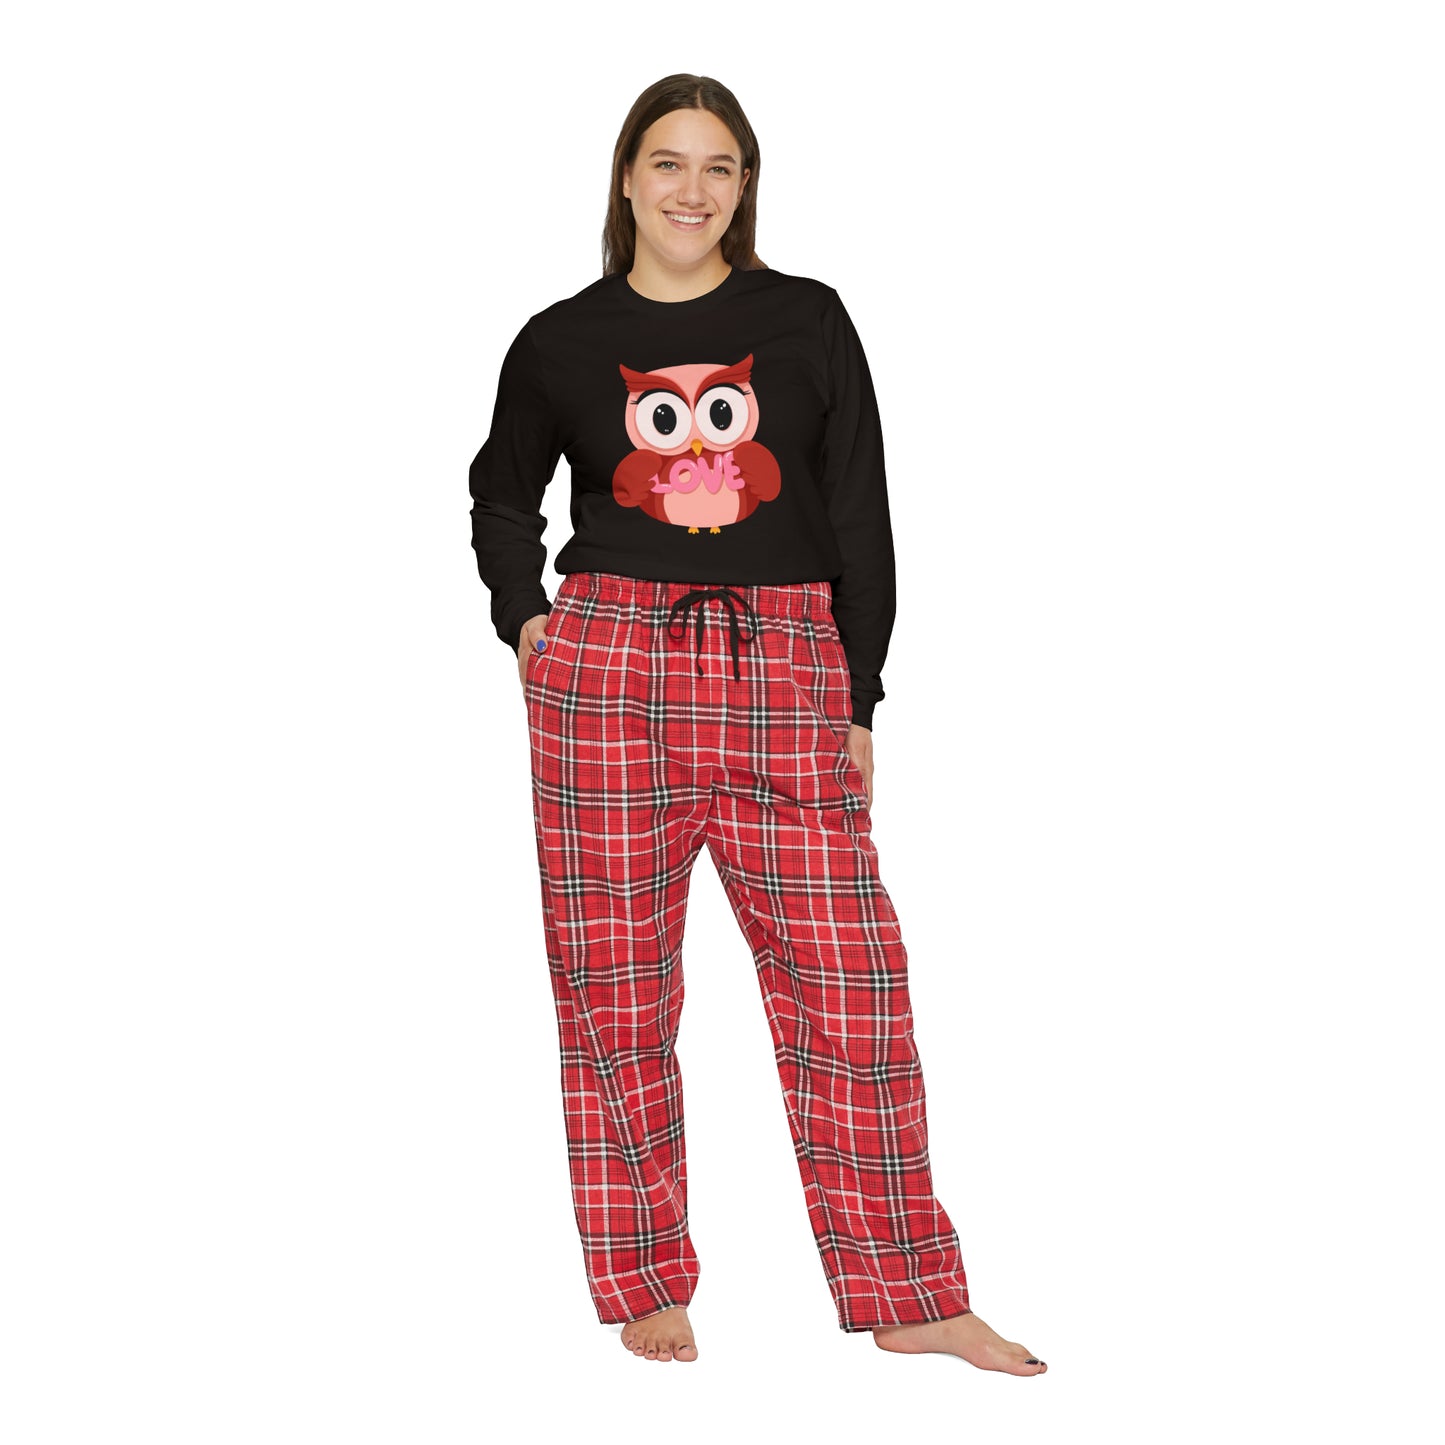 Owl "Love" Women's Long Sleeve Pajama Set, Adorable Pajama Set, 100% Cotton